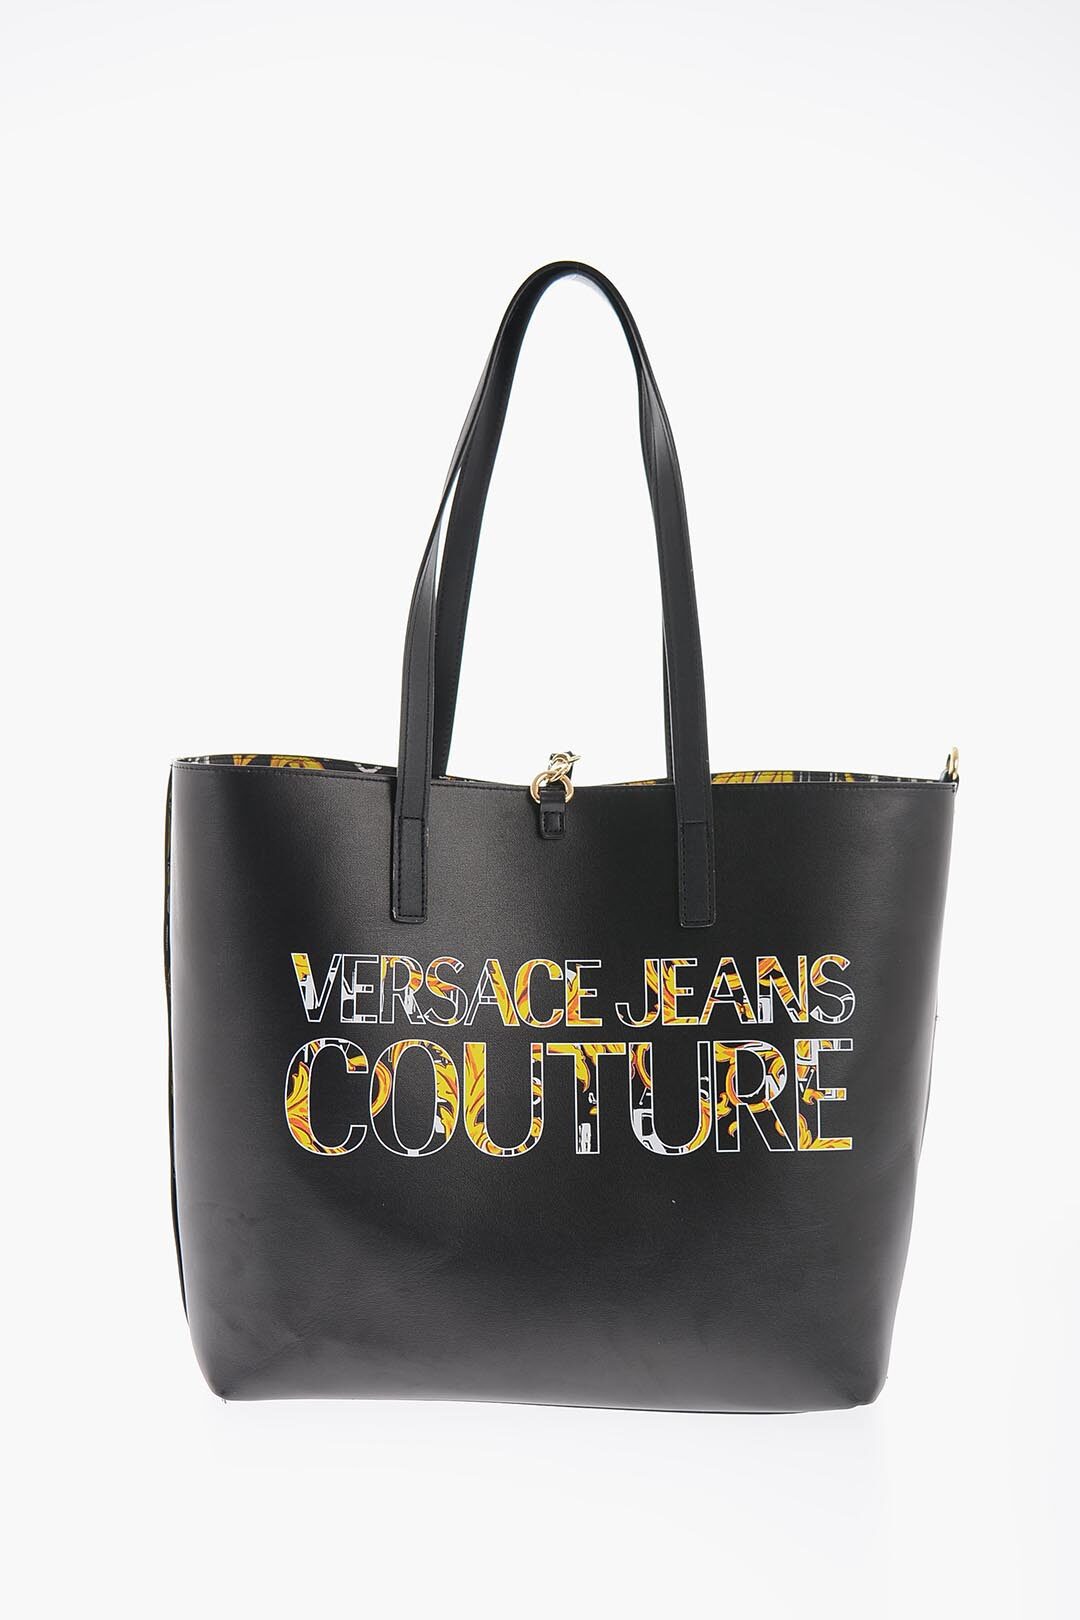 VERSACE JEANS COUTURE, Women's Handbag